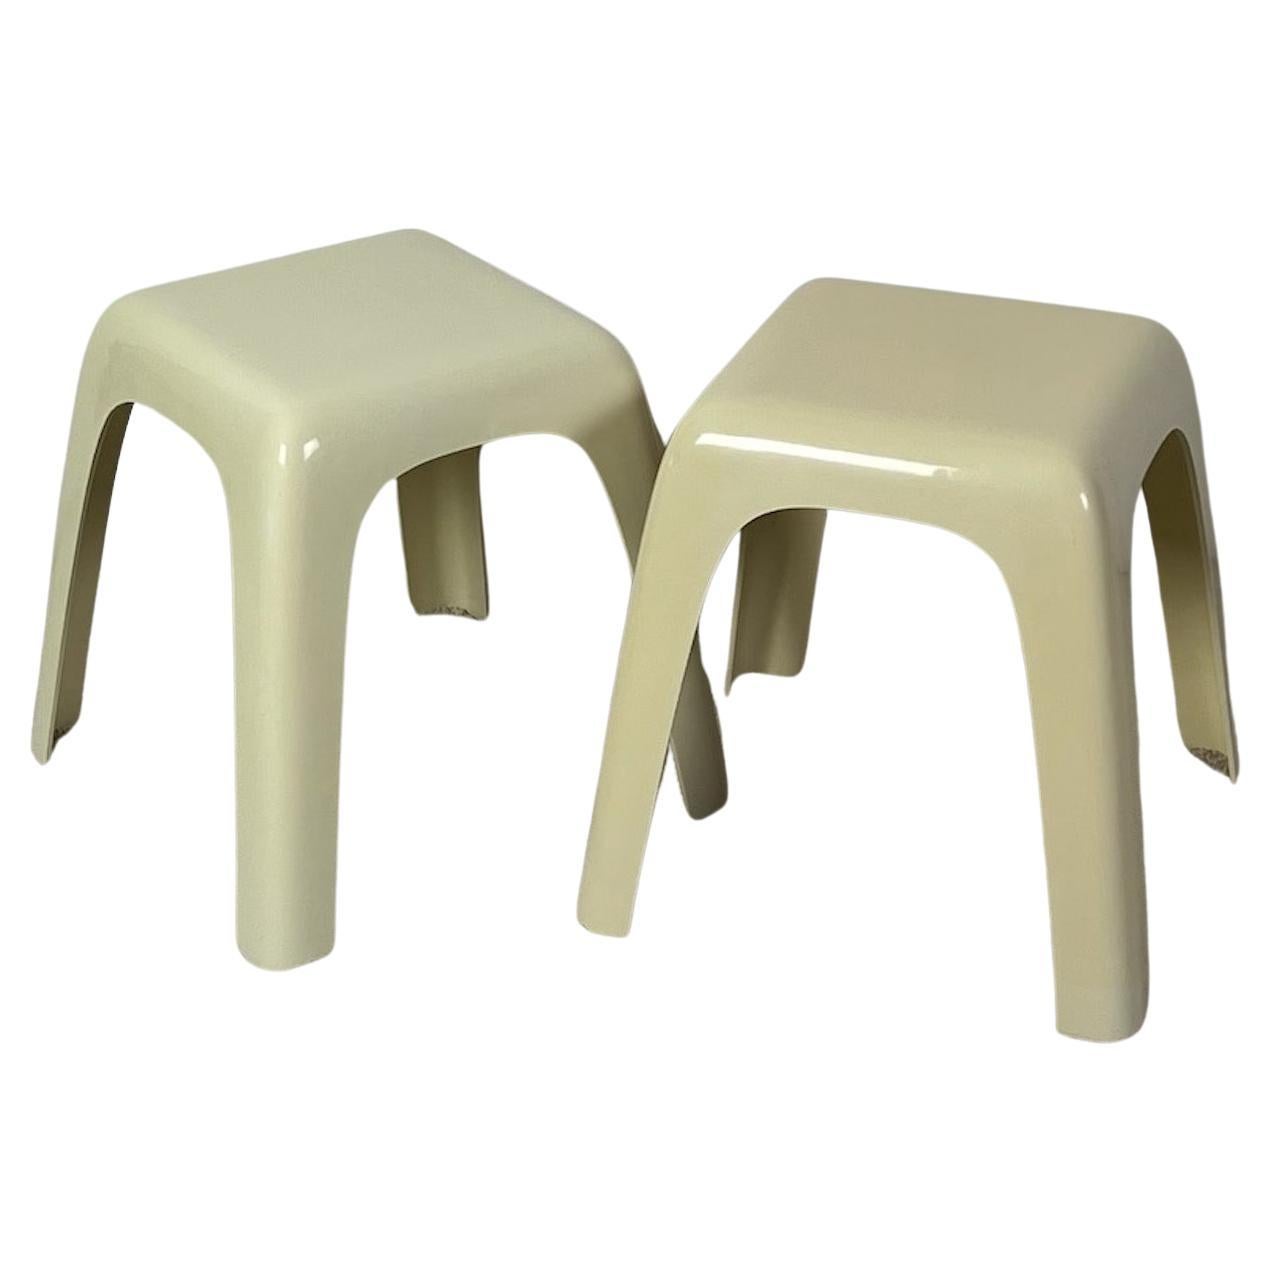 Set of tables / stools SMALL by Castiglioni Gaviraghi and Lanza for Valenti, 80s